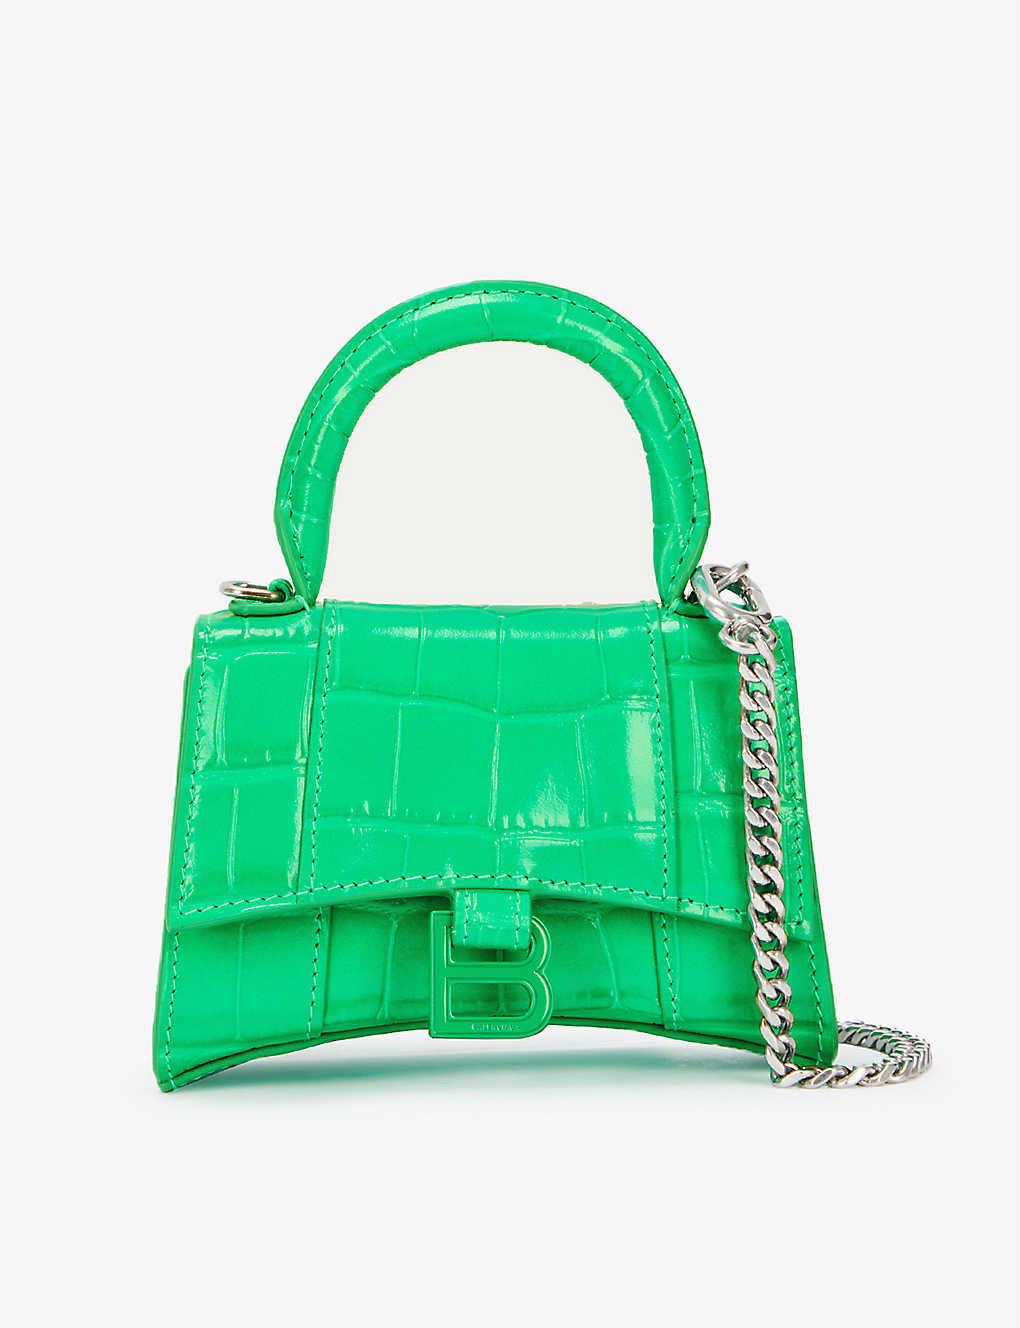 Hourglass Leather Shoulder Bag in Green - Balenciaga